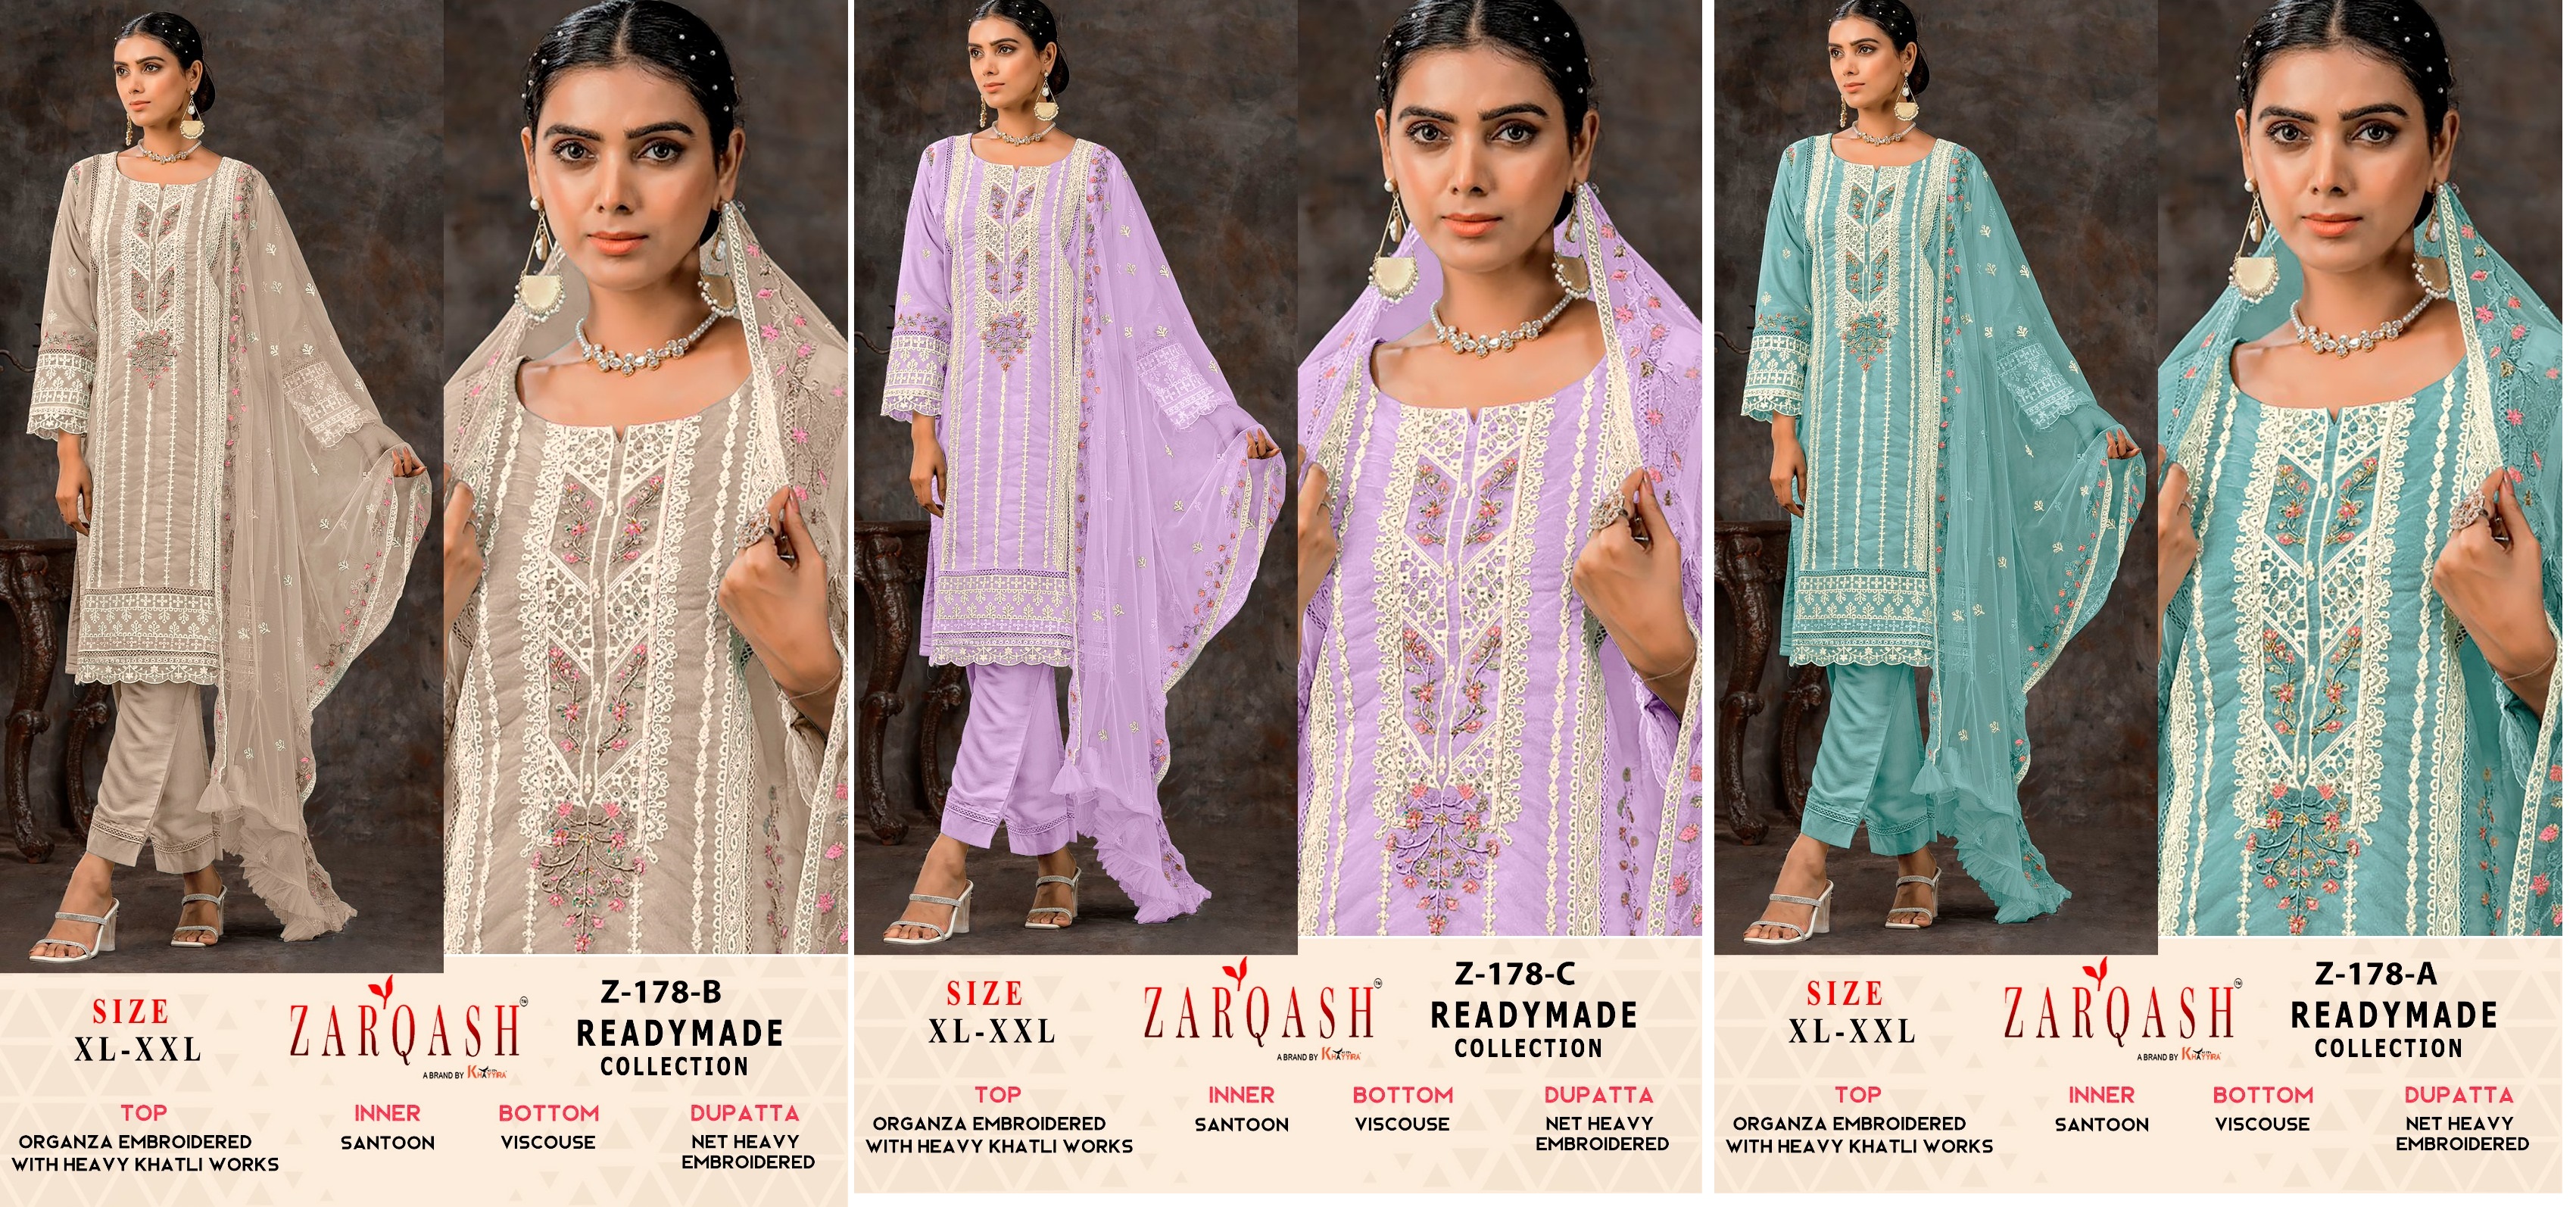 Zarqash Z 178 collection 2